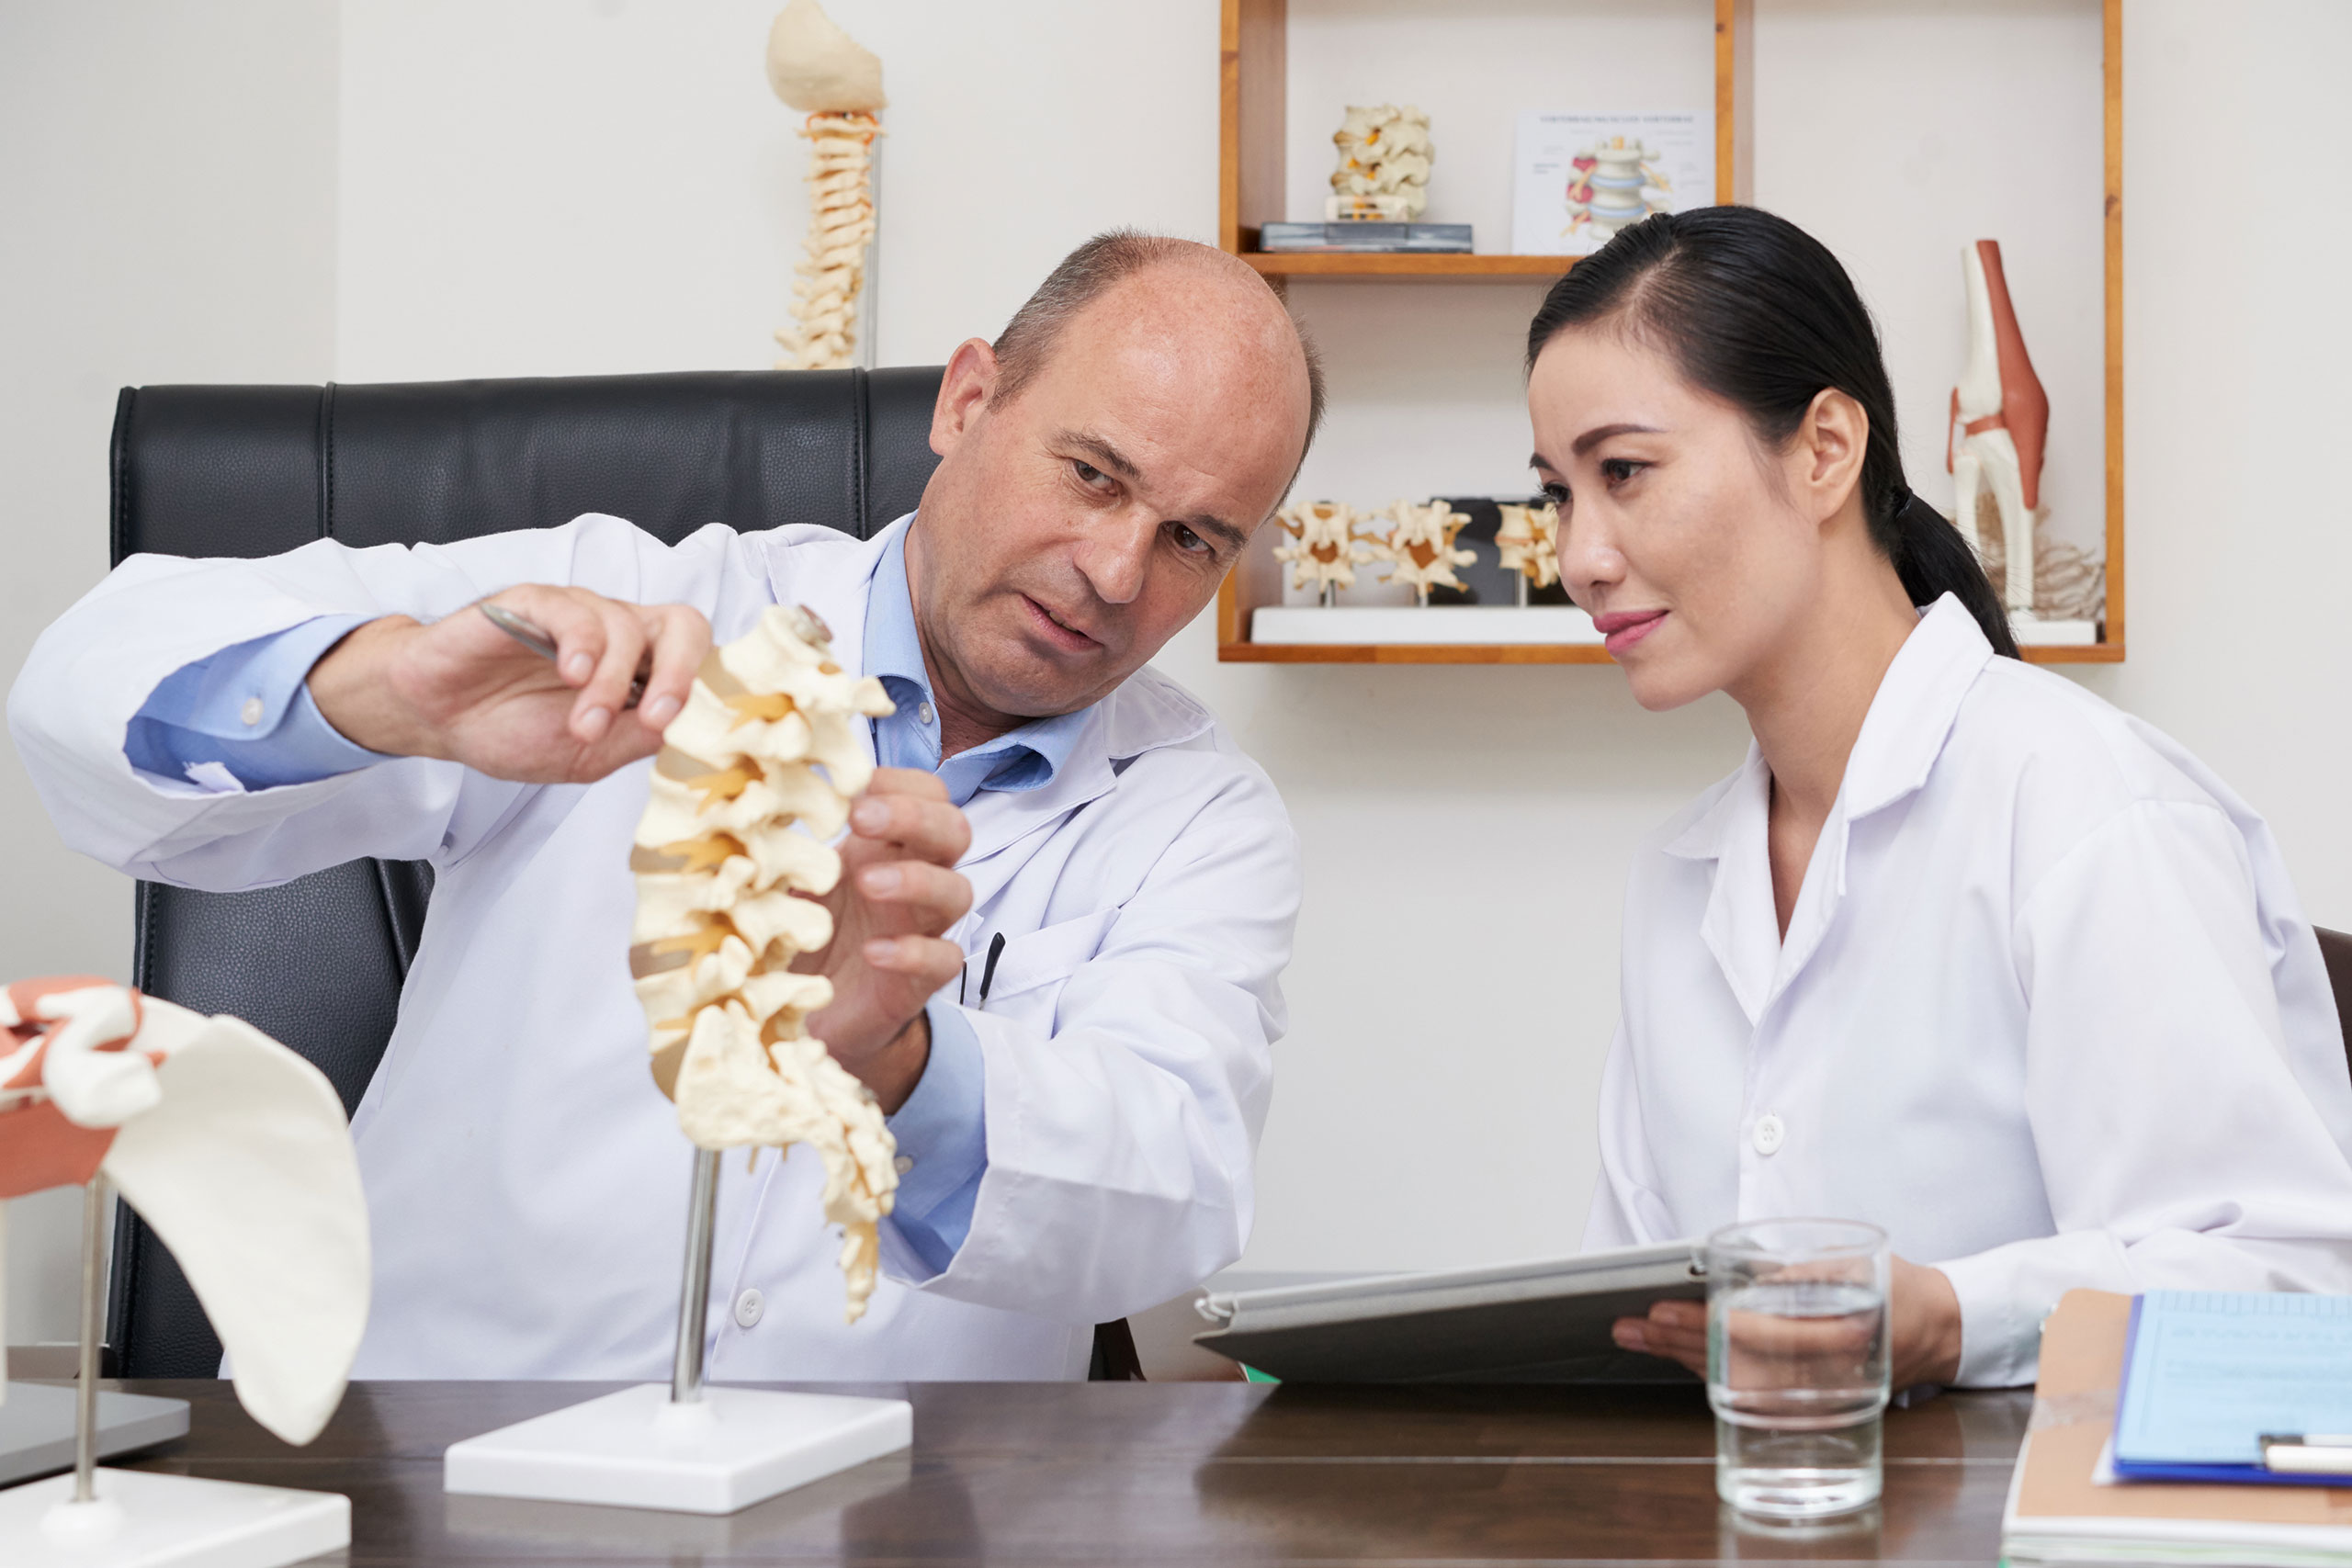 spine adjustment showcase